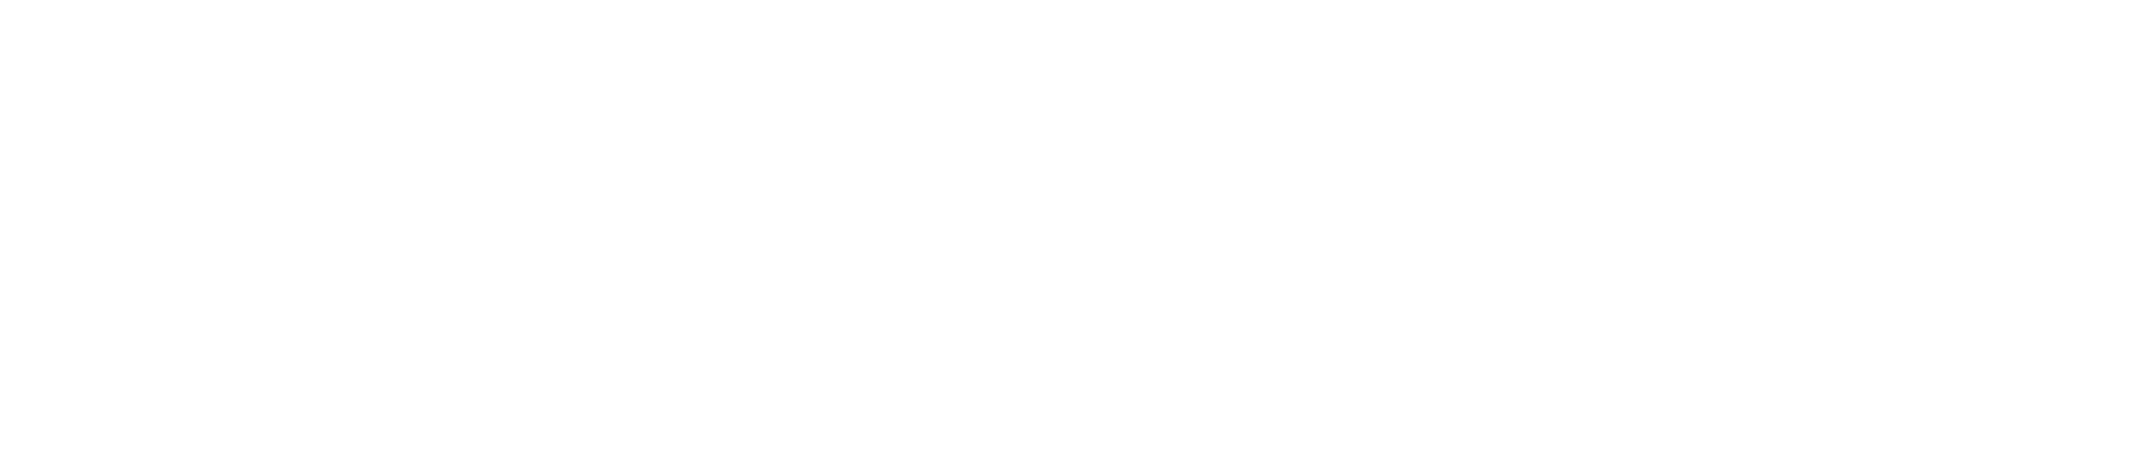 Davis Vision Incorporated